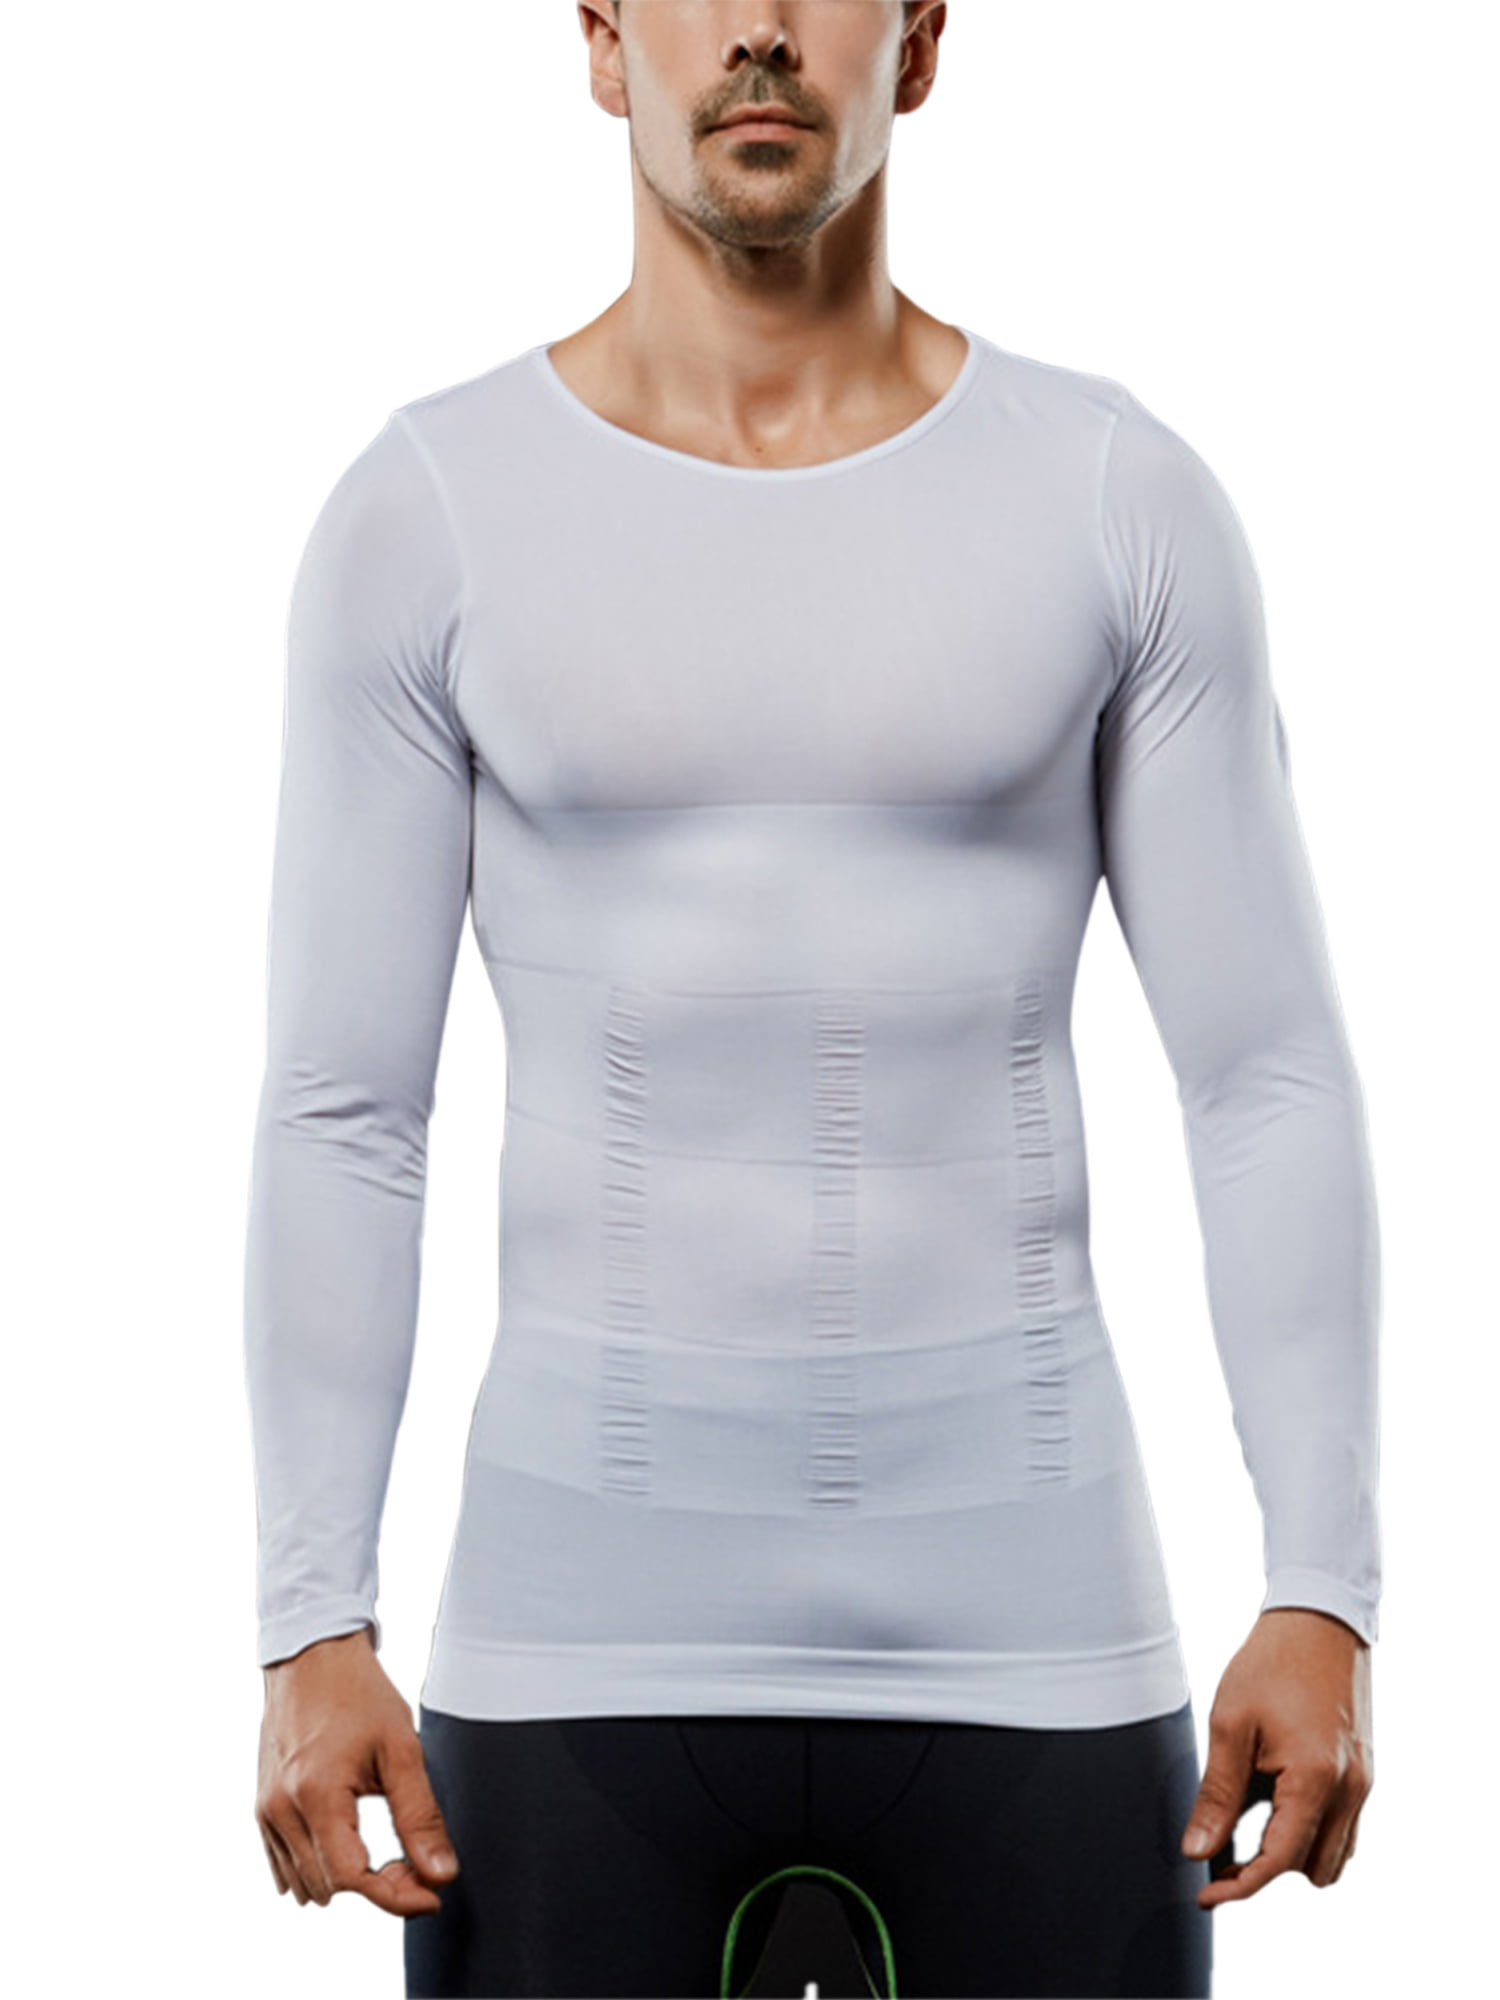 Men Compression Shirts Sport Tights Workout Fitness Running Shirt Long Sleeve Shirt Baselayer Cool Dry Underlayer Top